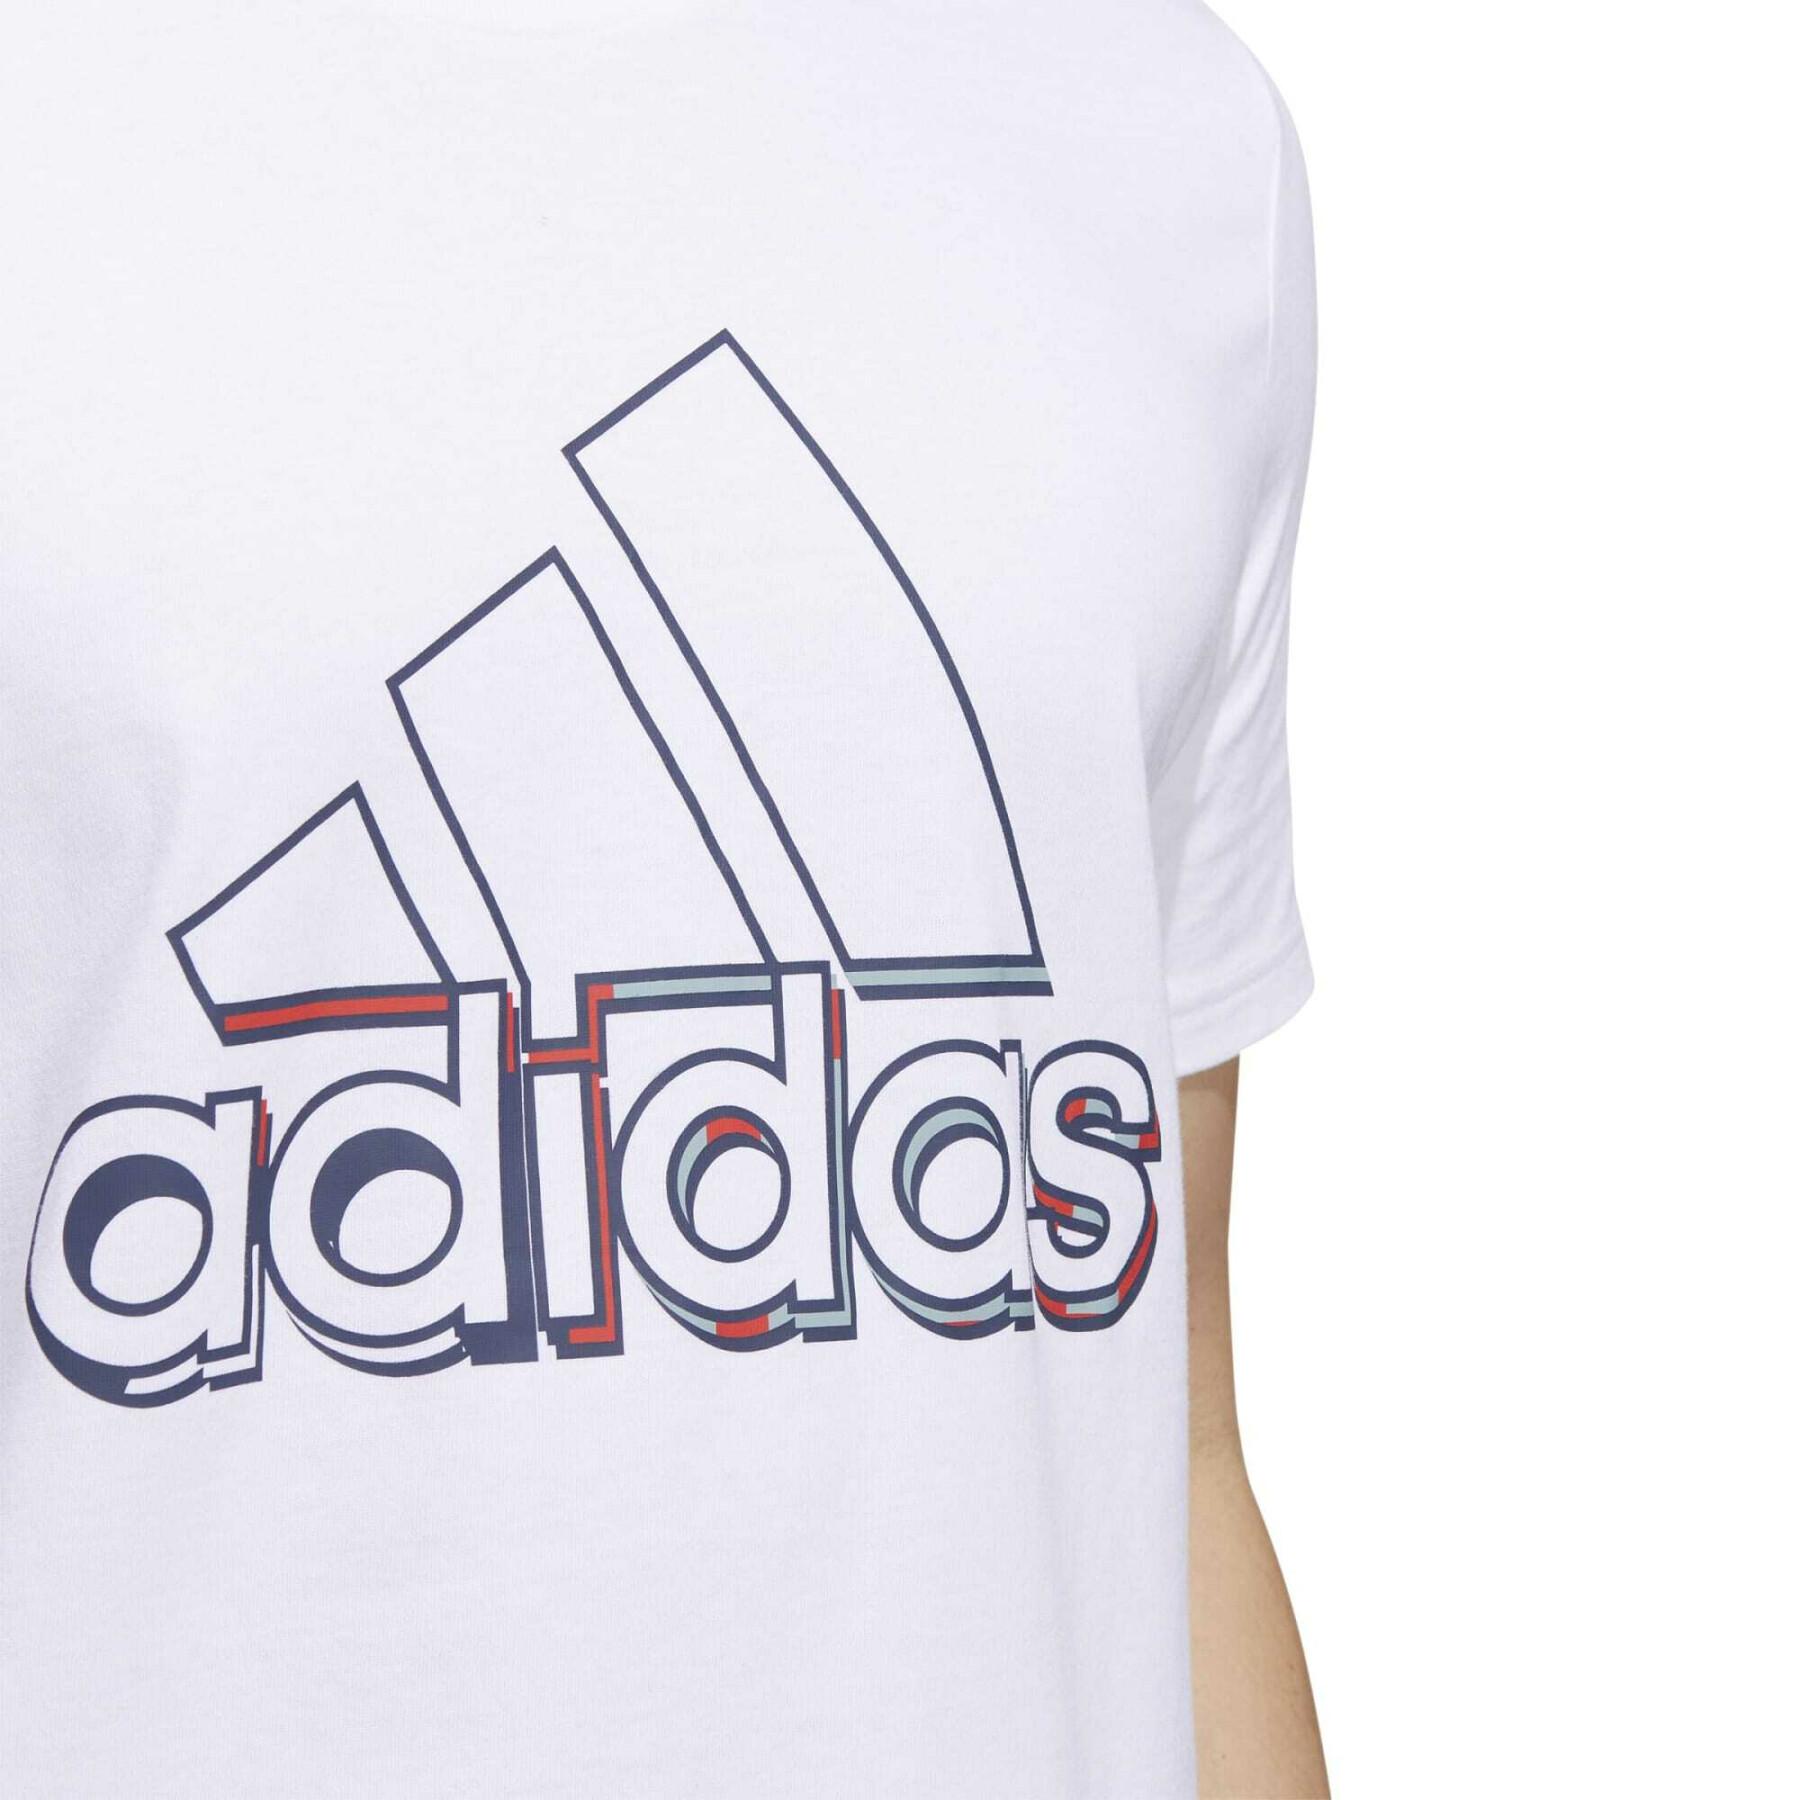 Grafisches T-Shirt adidas Dynamic Sport